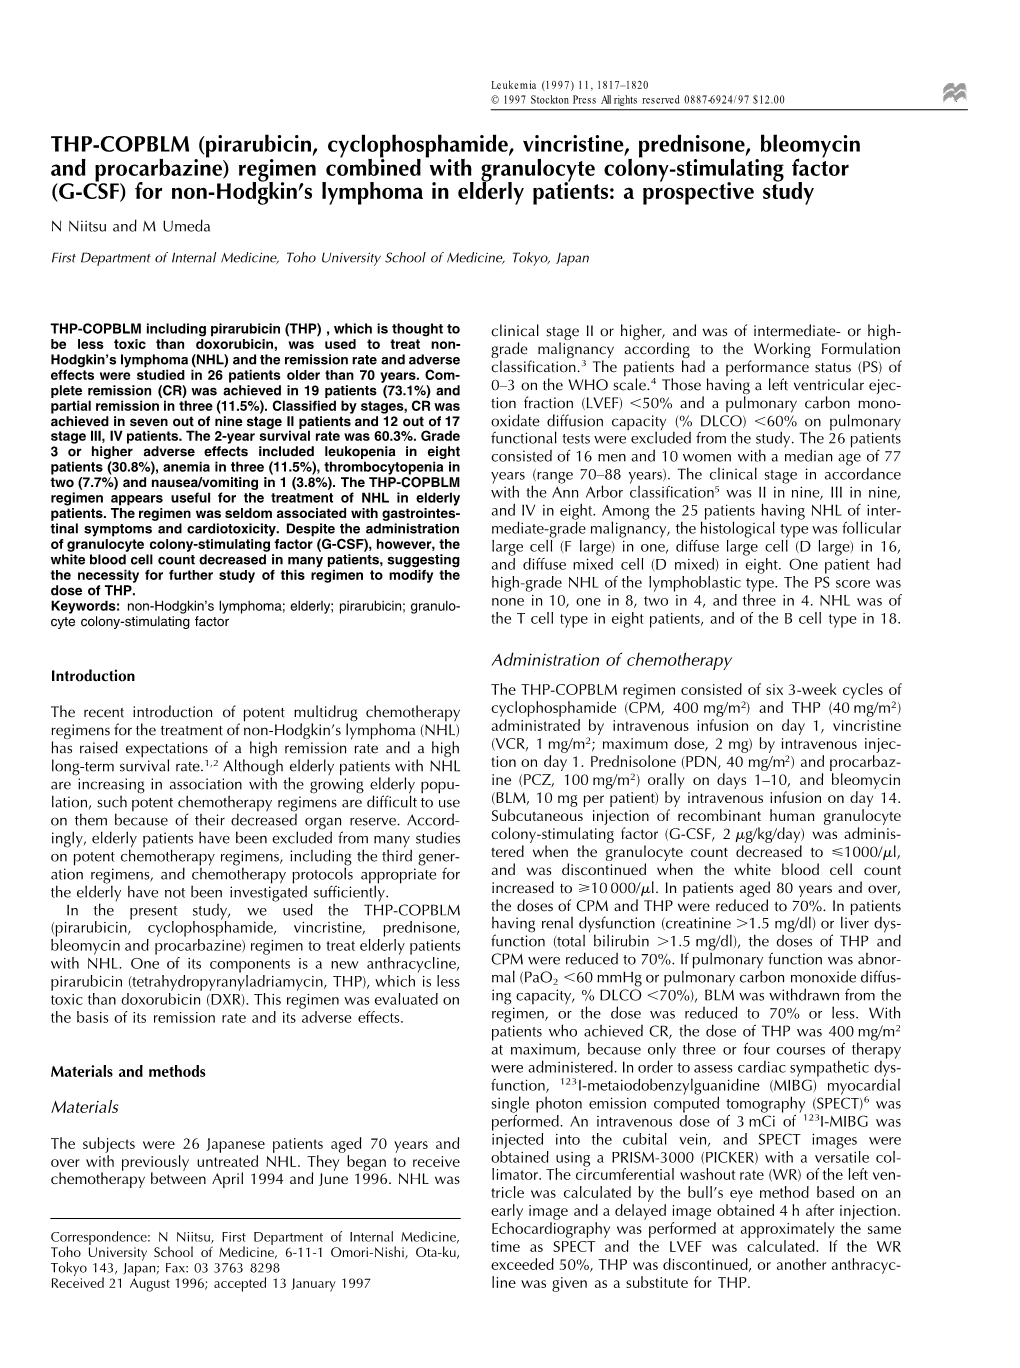 THP-COPBLM (Pirarubicin, Cyclophosphamide